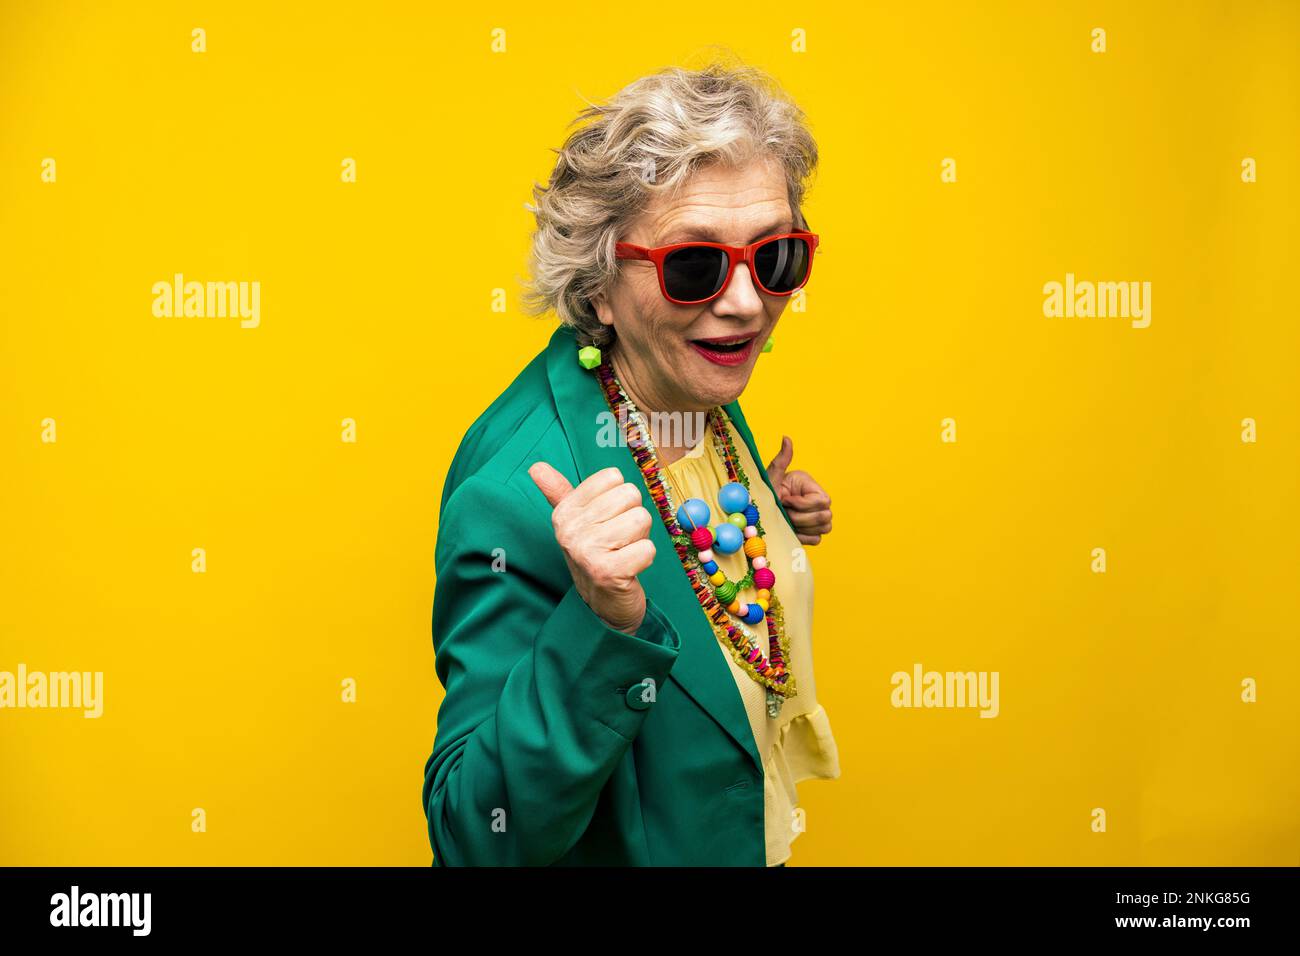 Cool senior woman wearing blazer jacket against yellow background Stock Photo